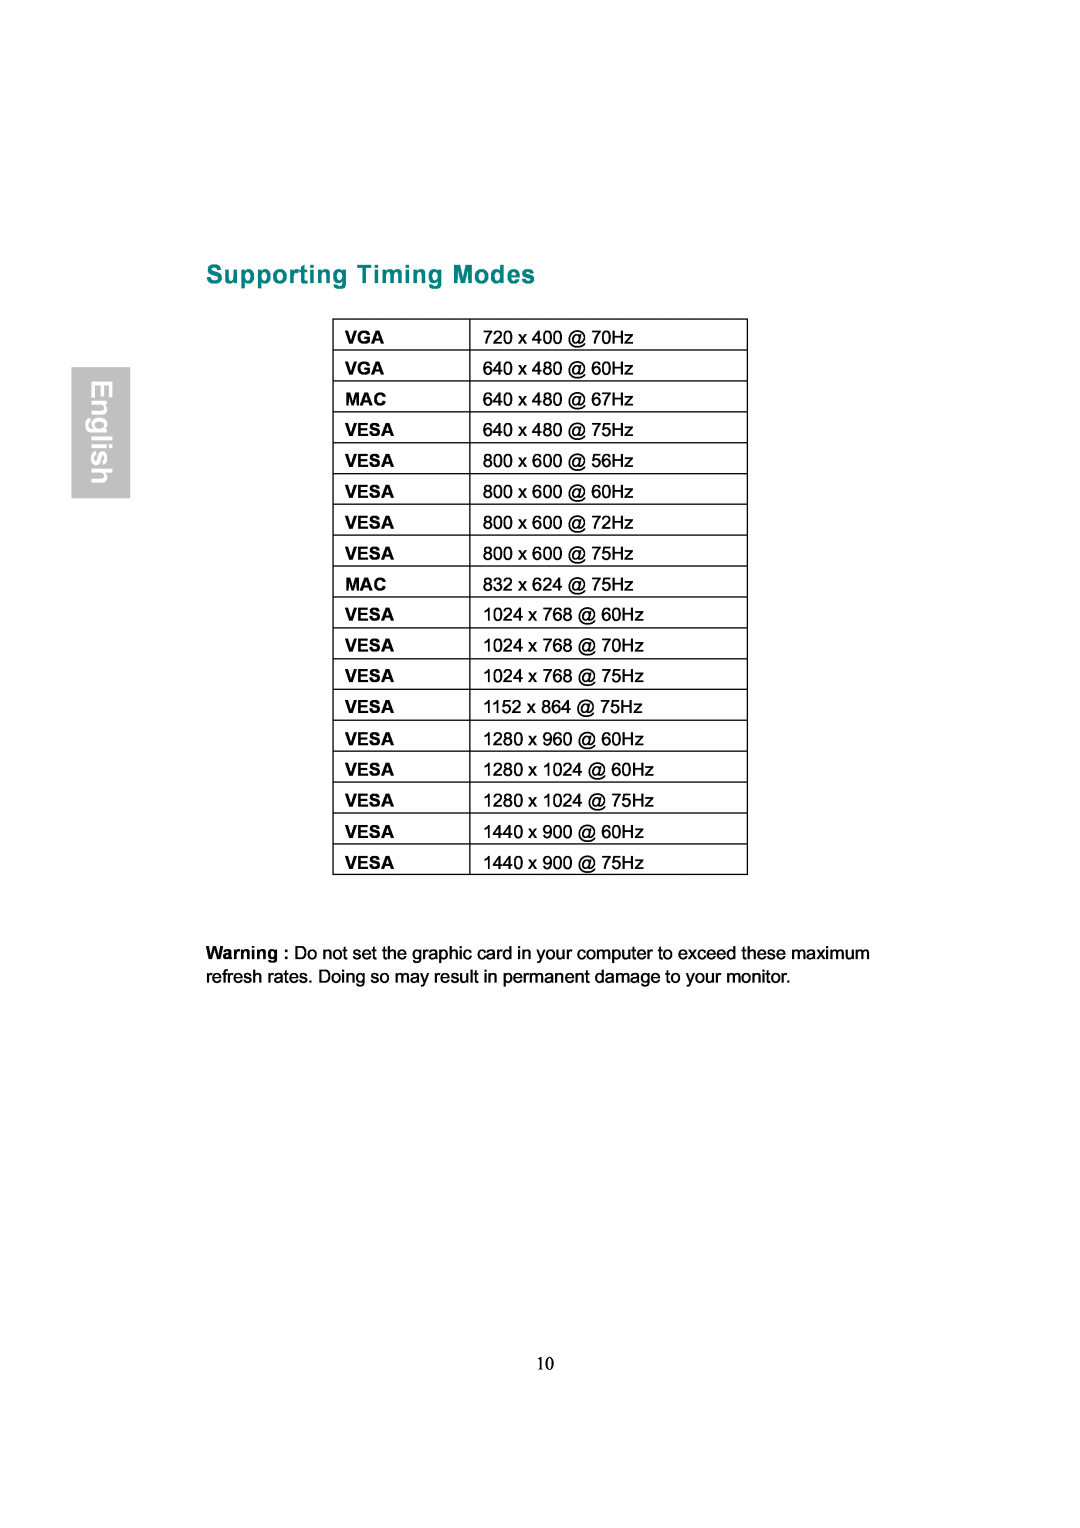 AOC 919Sw-1 Supporting Timing Modes, English, 720 x 400 @ 70Hz, 640 x 480 @ 60Hz, 640 x 480 @ 67Hz, Vesa, 640 x 480 @ 75Hz 